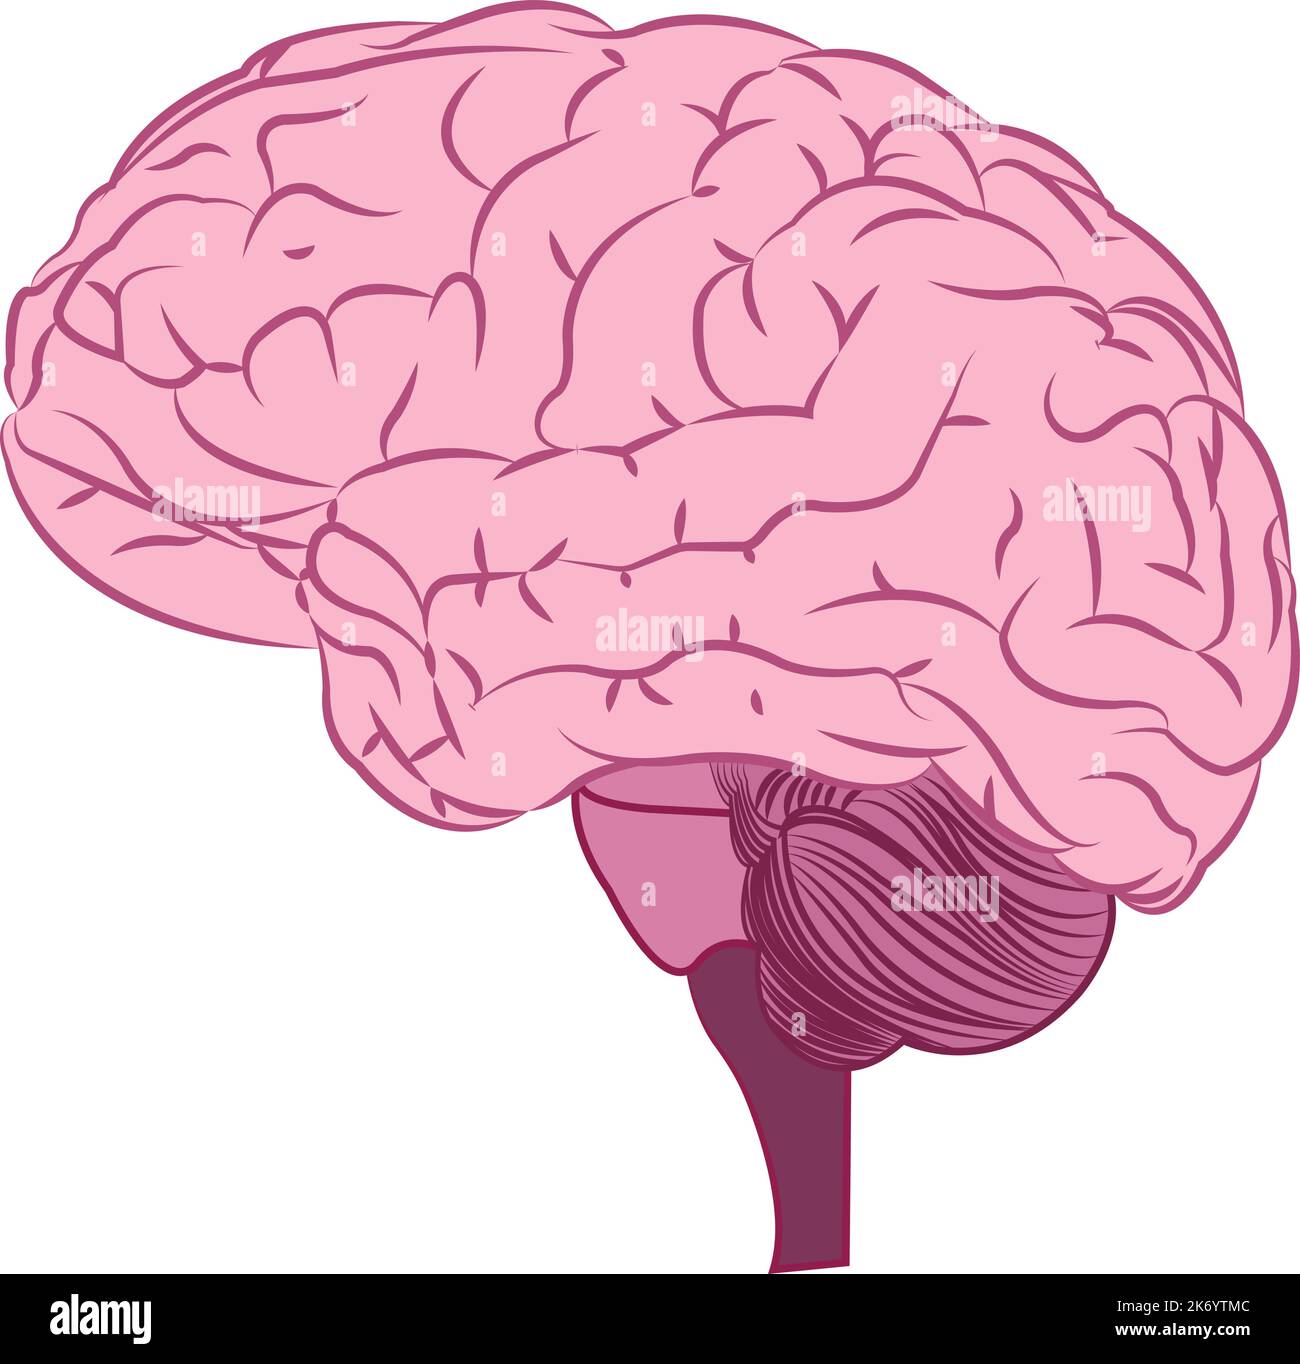 human brain vector Stock Vector